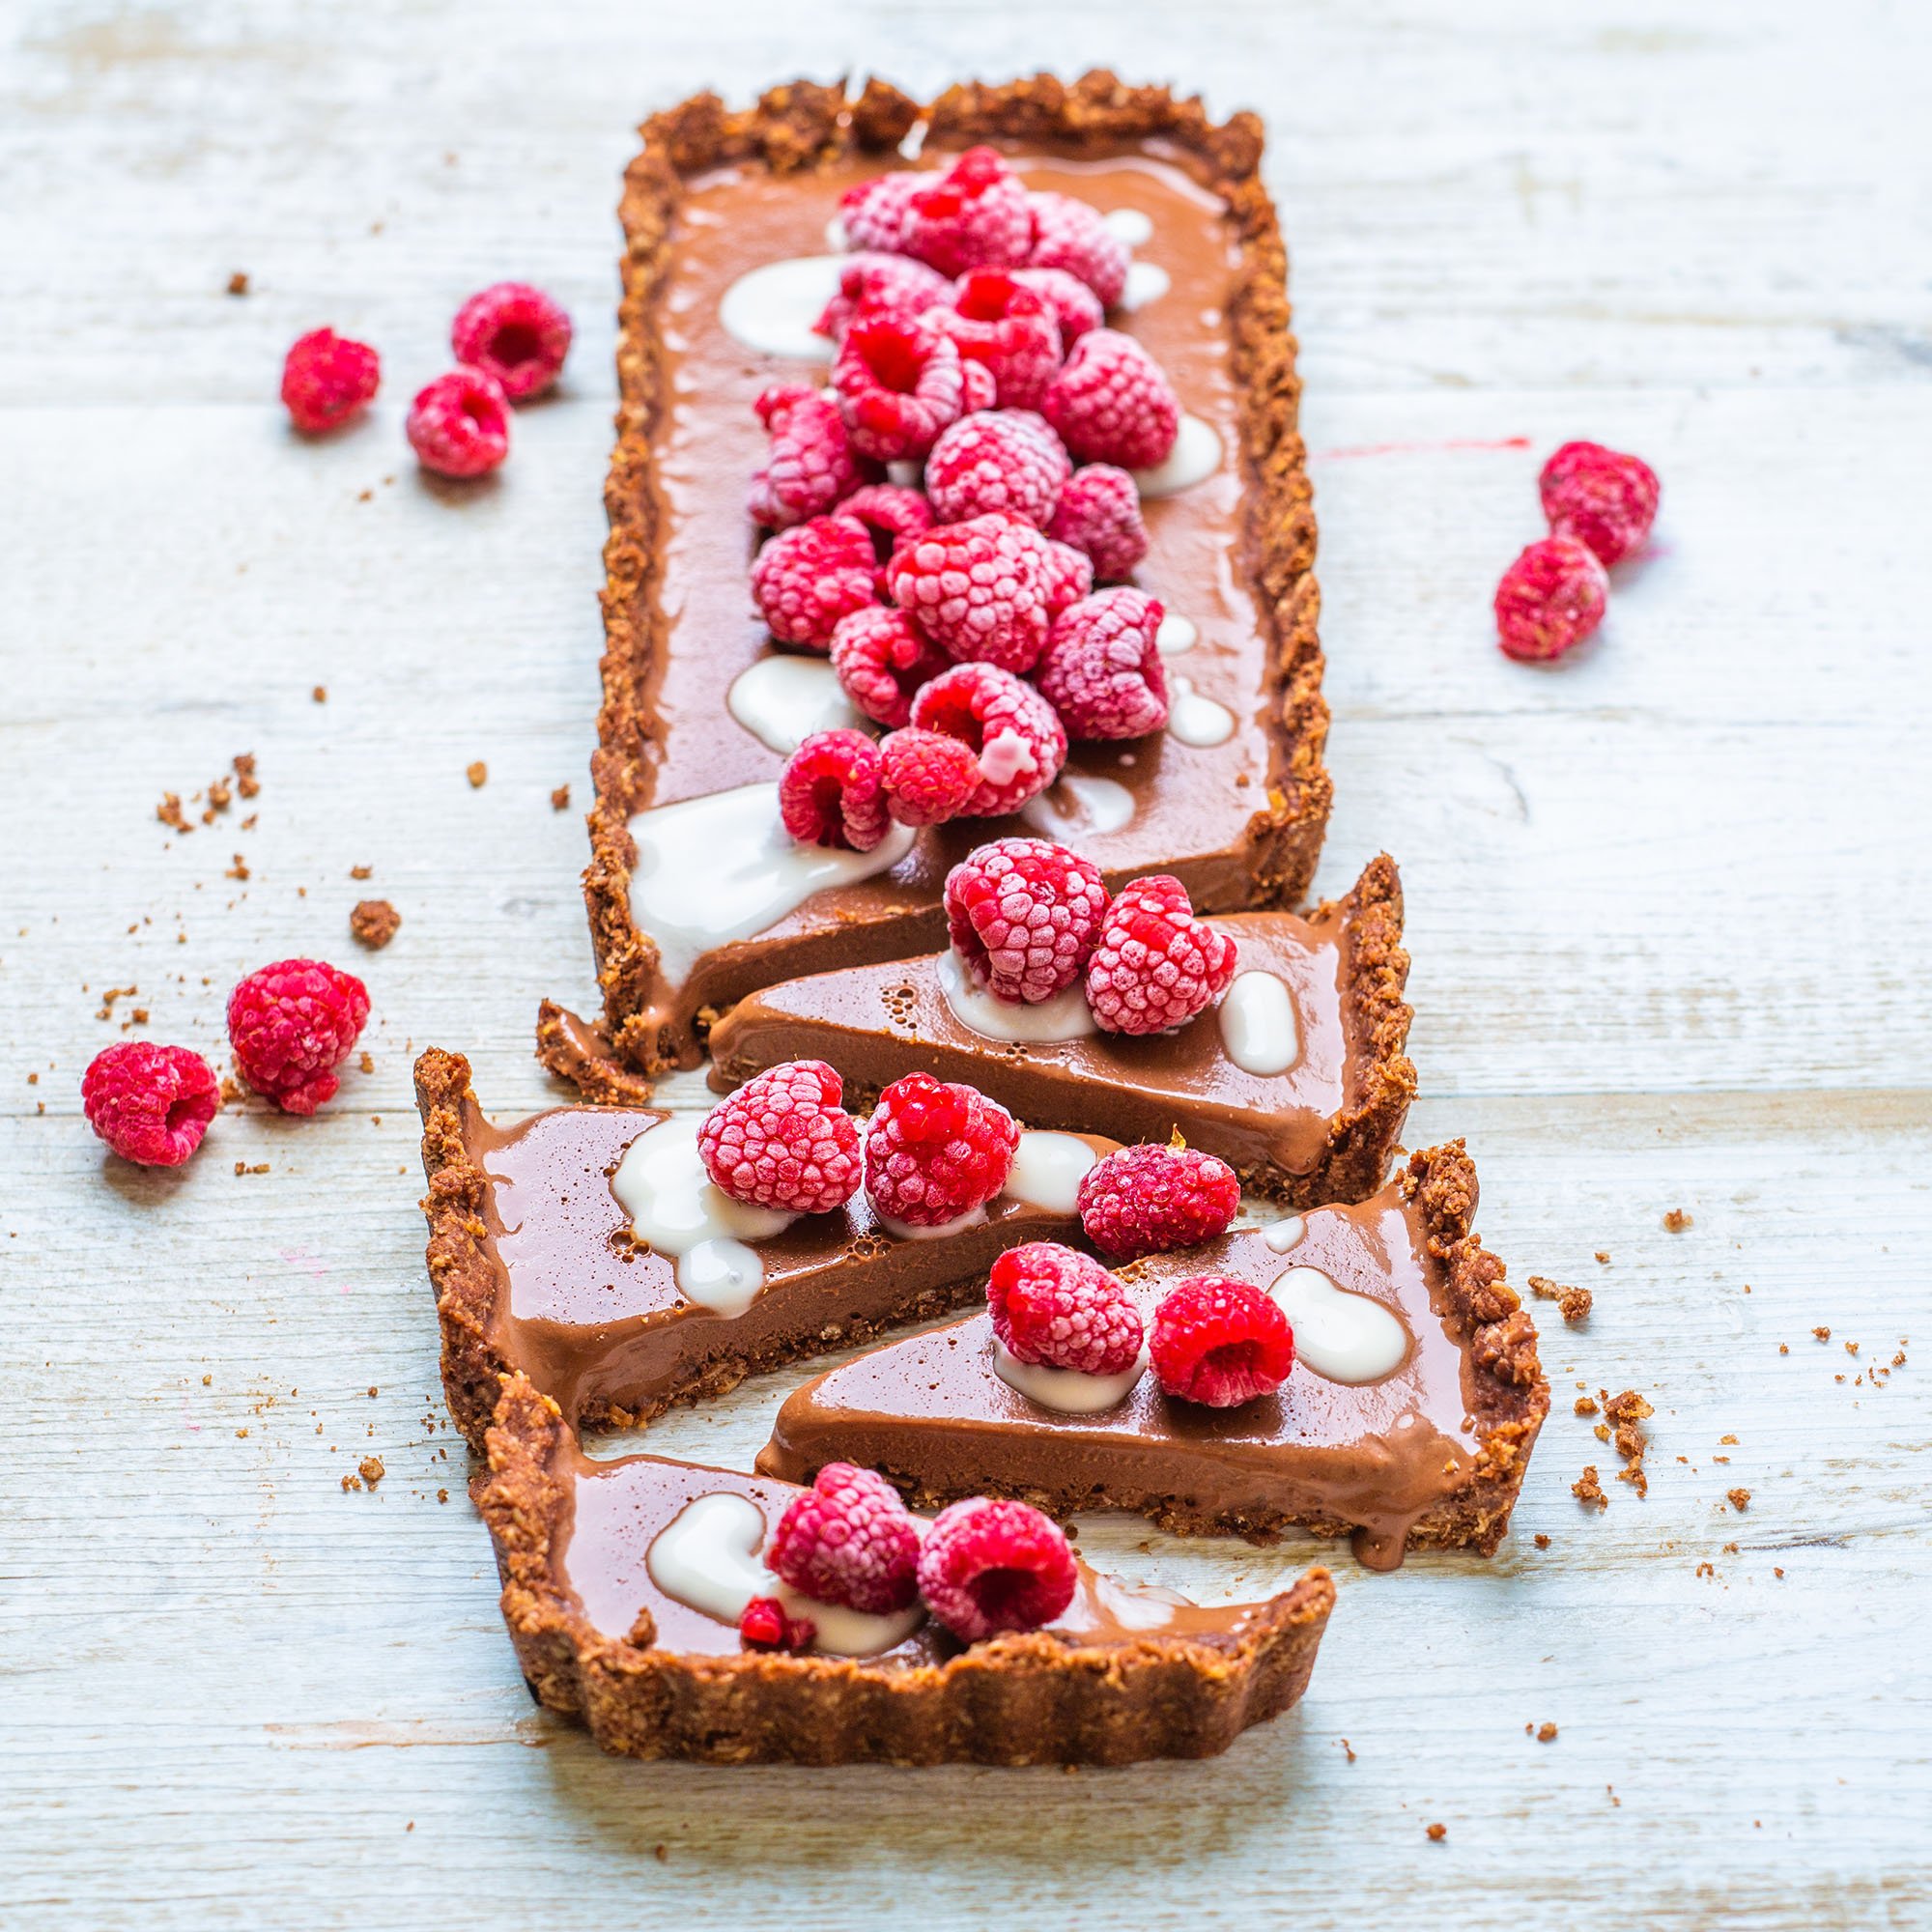 Vegan Chocolate Almond Tart with Raspberries